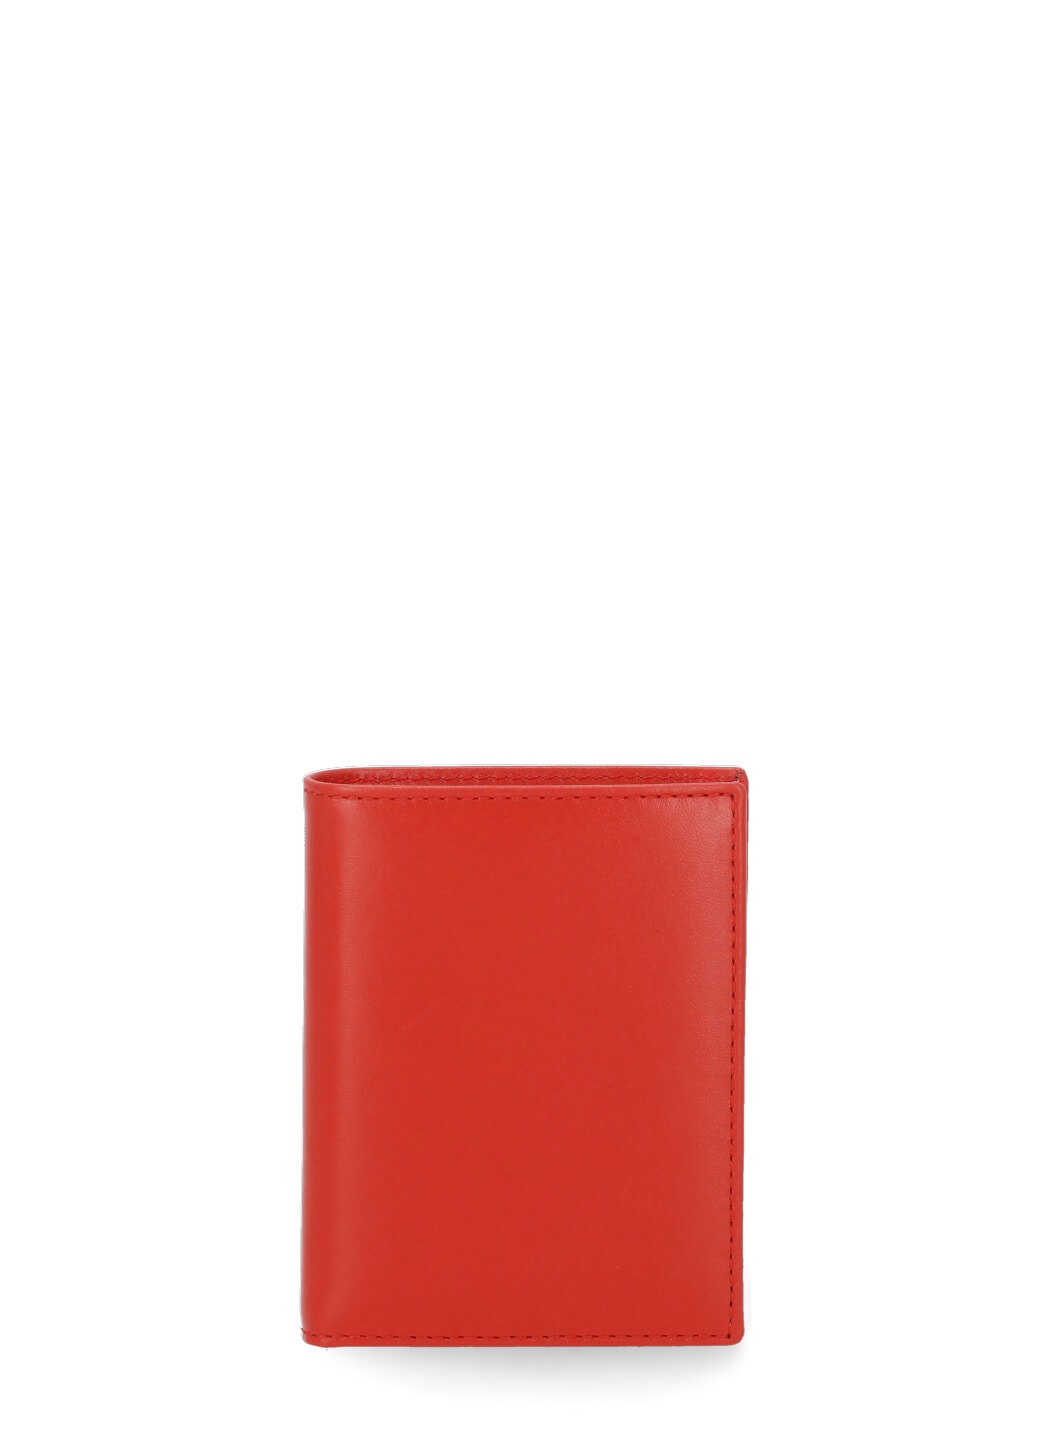 Shop Comme Des Garçons Leather Wallet In Red